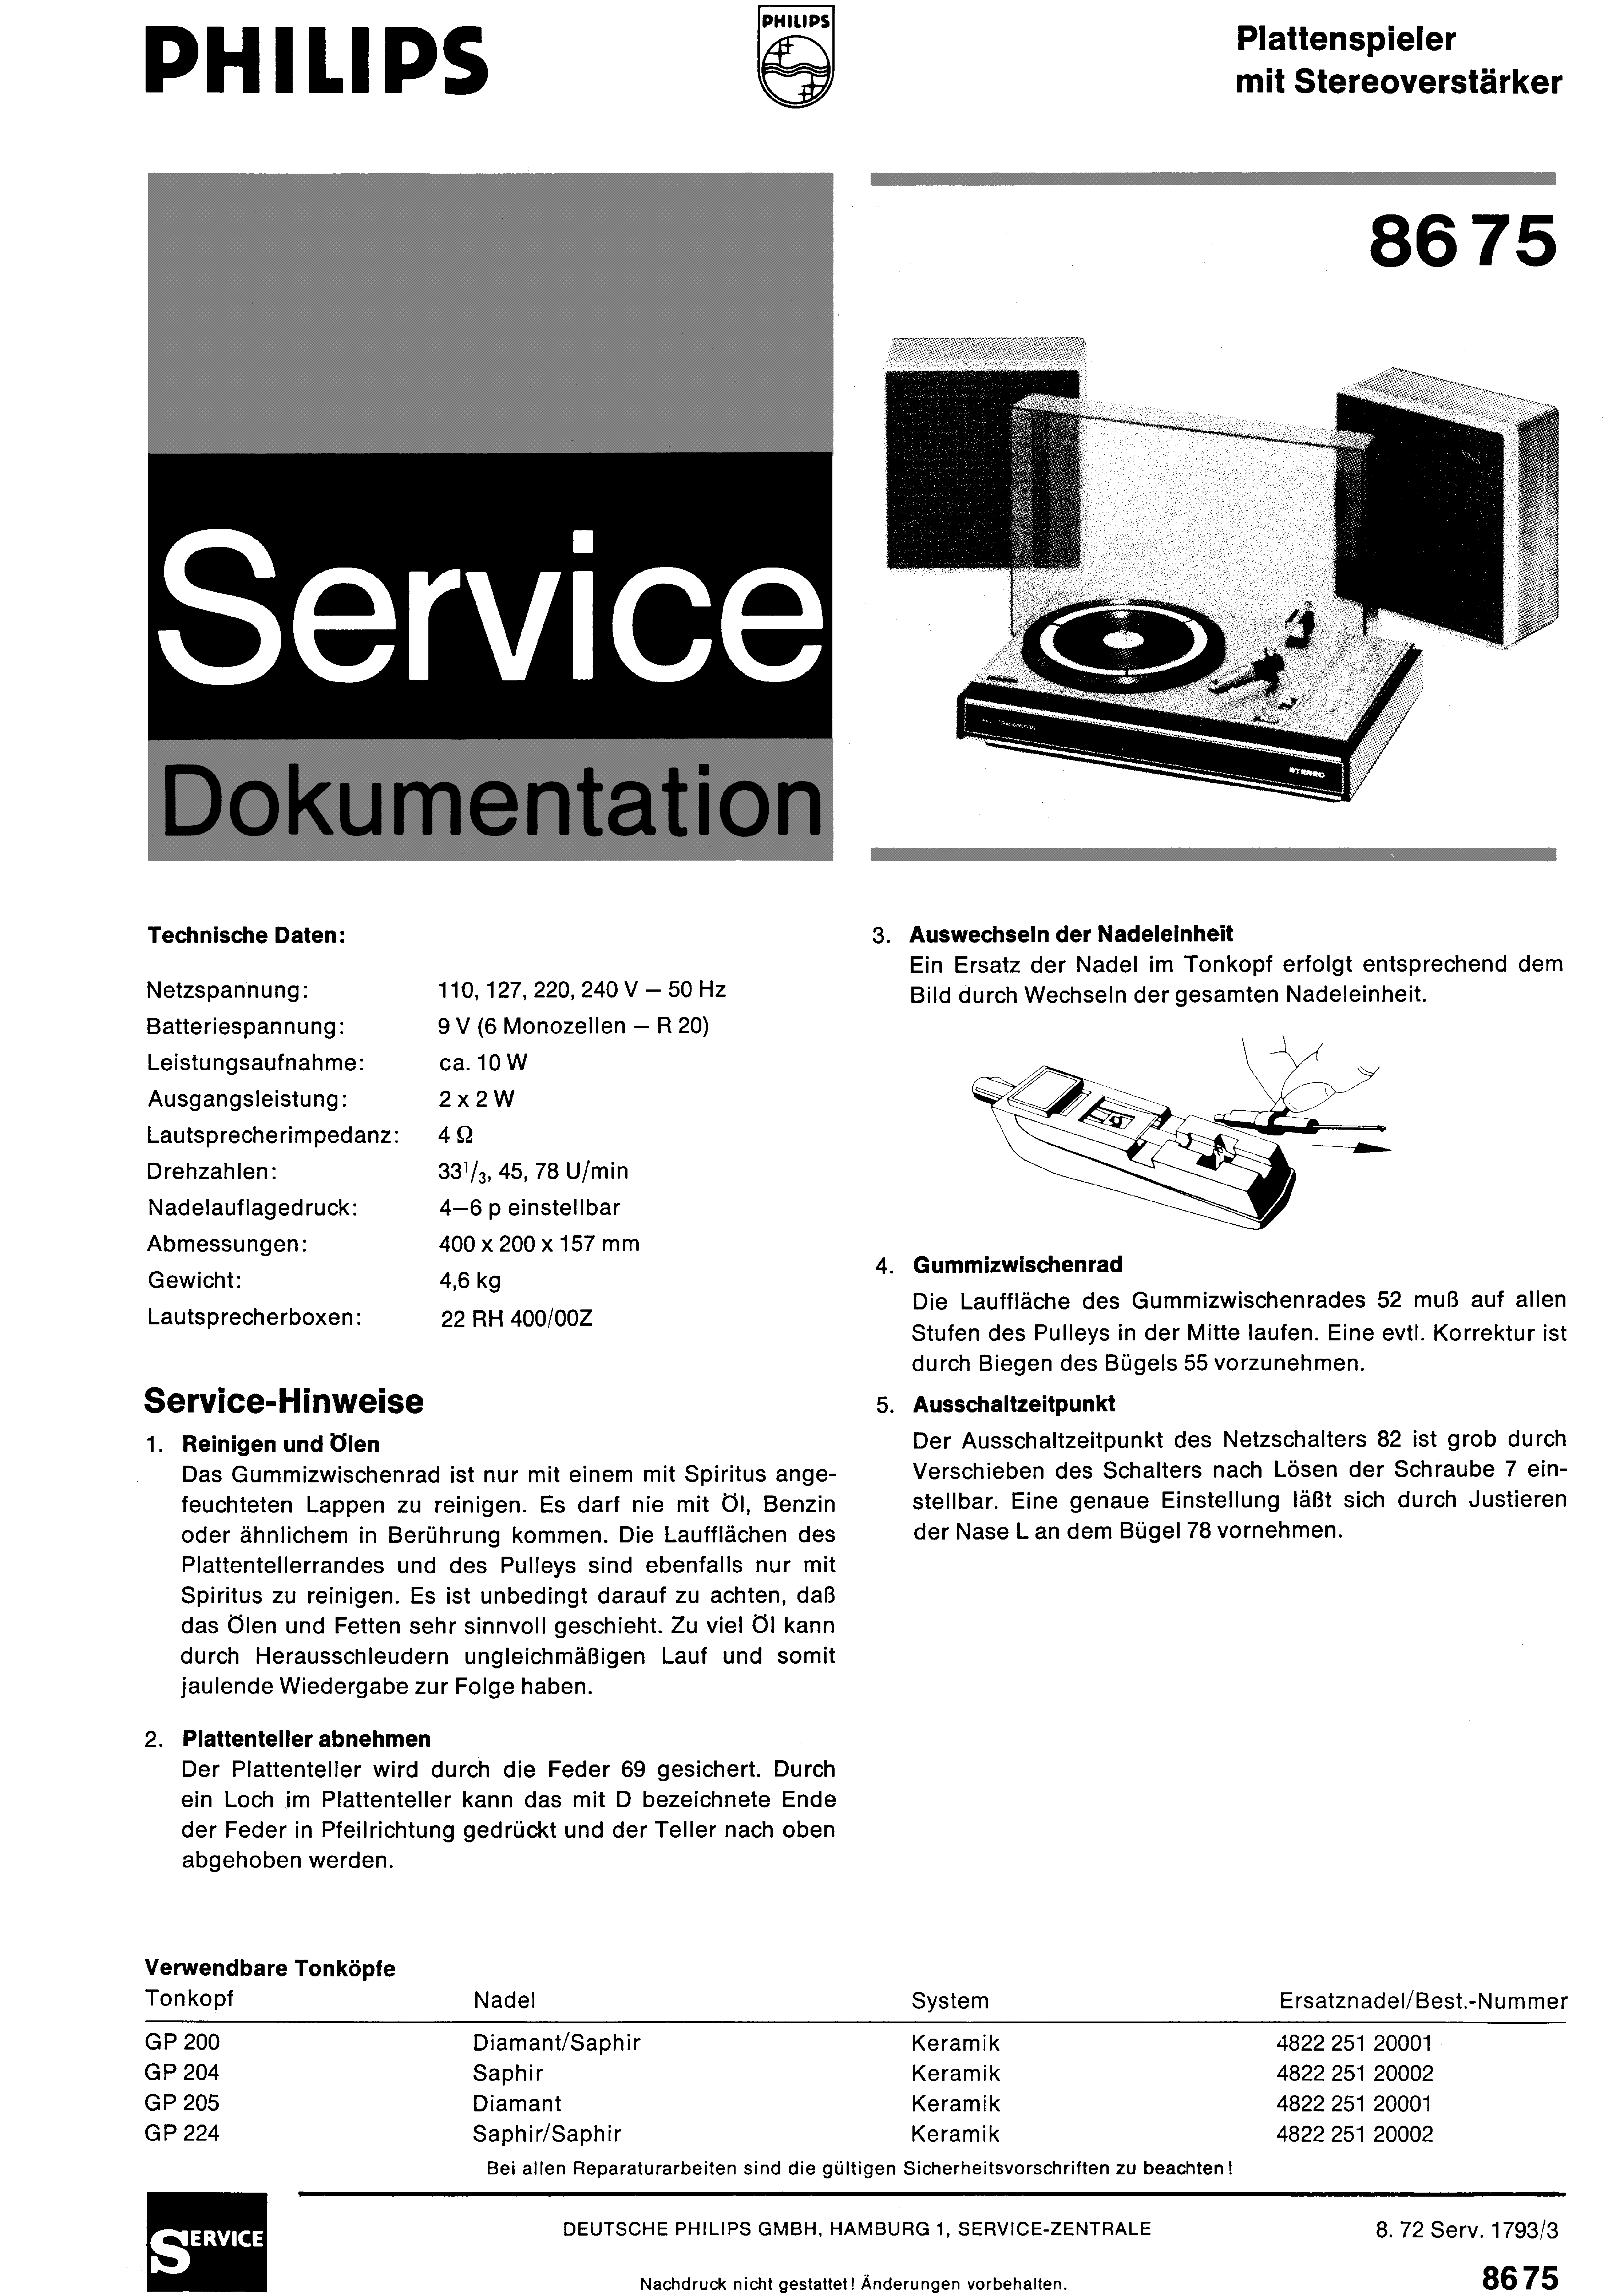 PHILIPS PLATTENSPIELER MIT STEREOVERSTAERKER 8675 SM service manual (1st page)